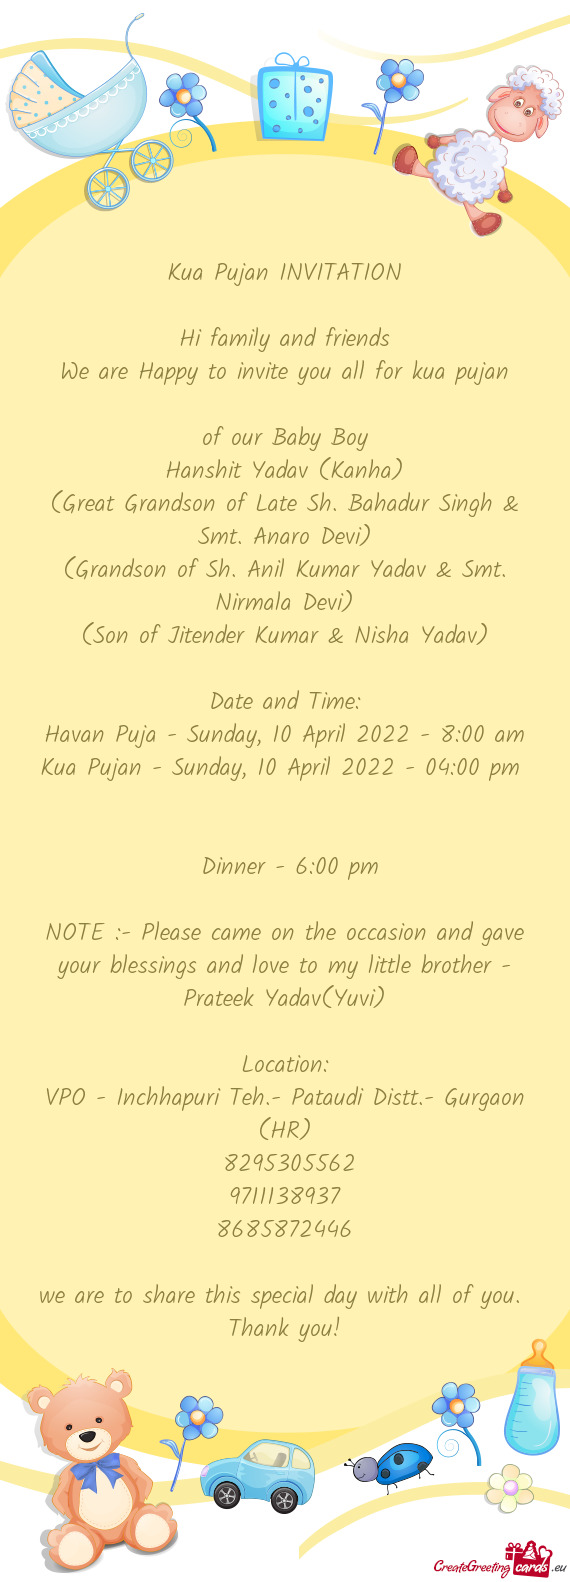 Havan Puja - Sunday, 10 April 2022 - 8:00 am